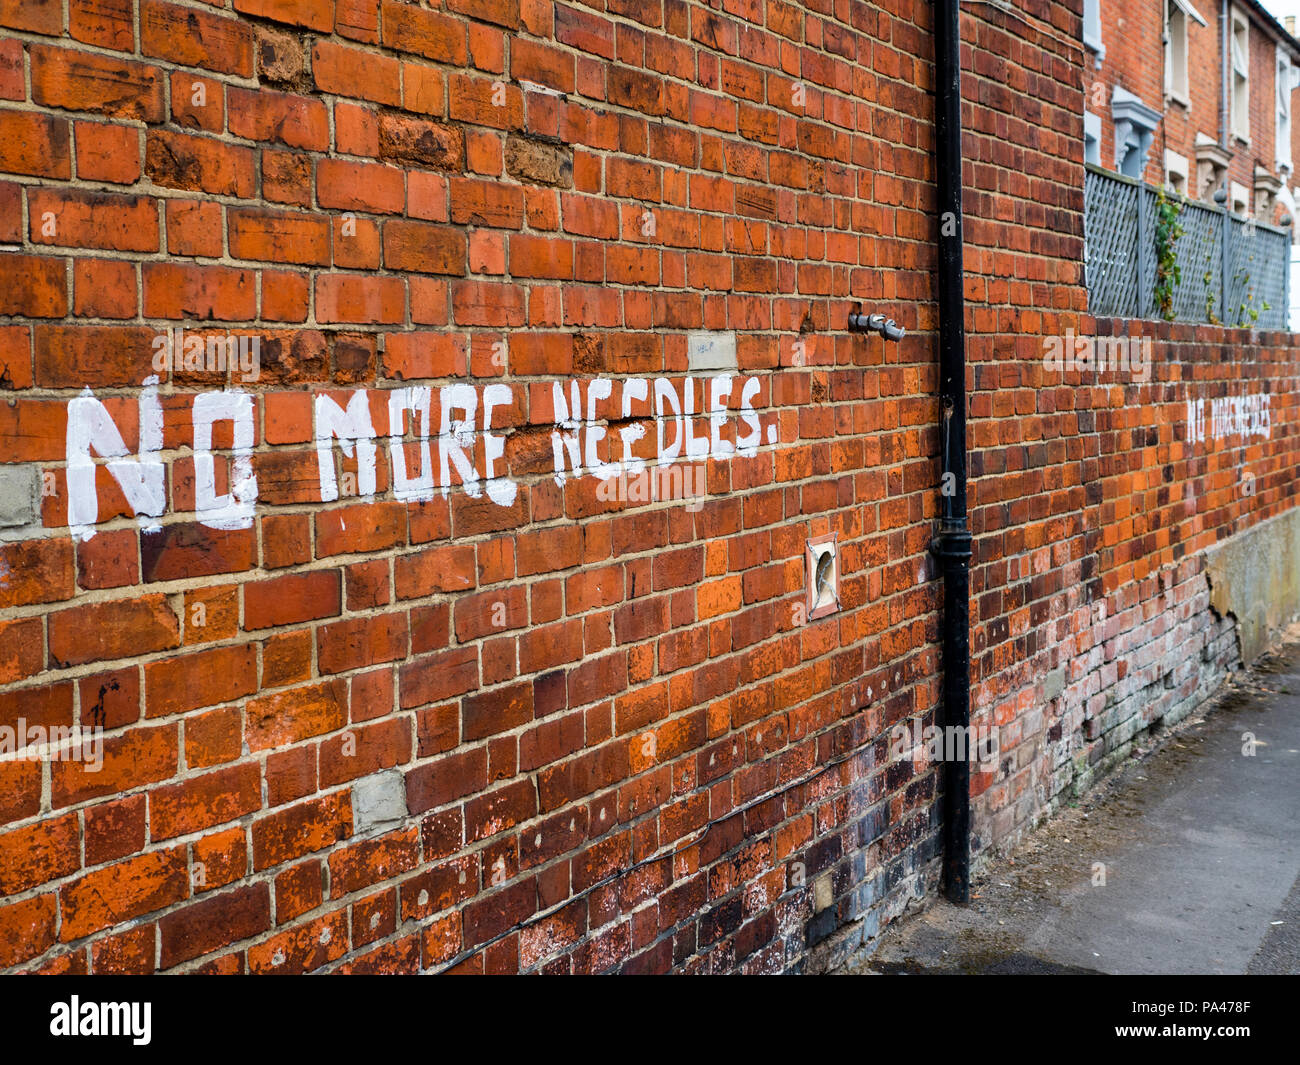 Residents Use Graffiti, to deter Drug Users, Cambridge st, Reading, Berkshire, England, UK, GB. Stock Photo